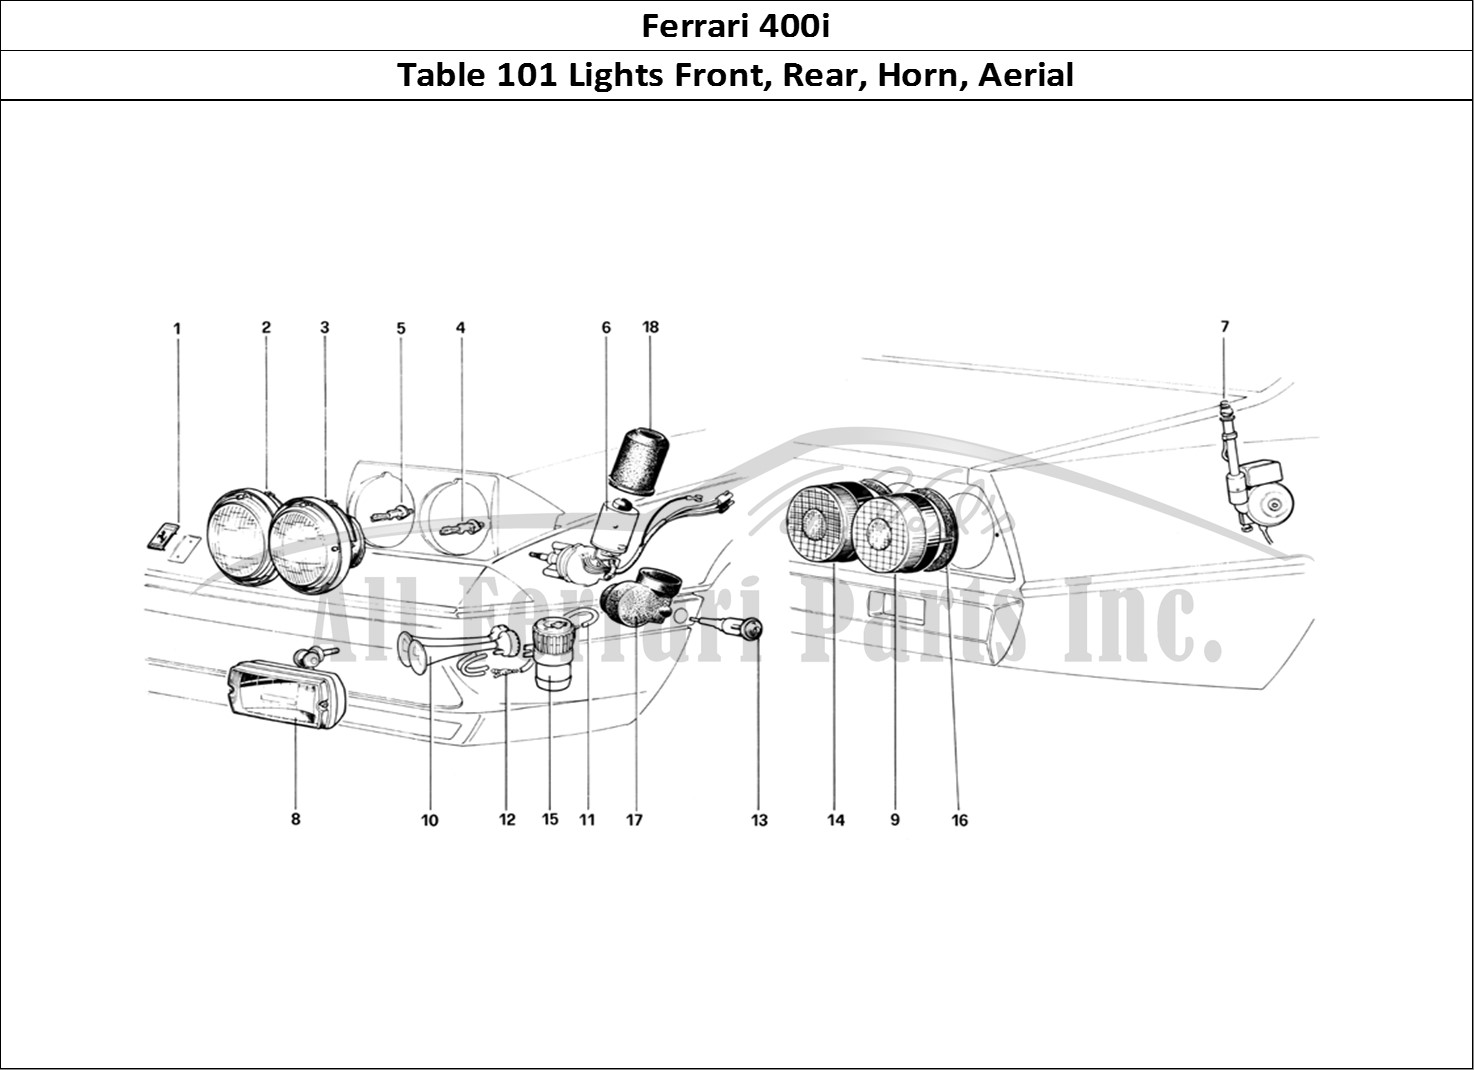 Ferrari Parts Ferrari 400i (1983 Mechanical) Page 101 Front and Rear Lights - H